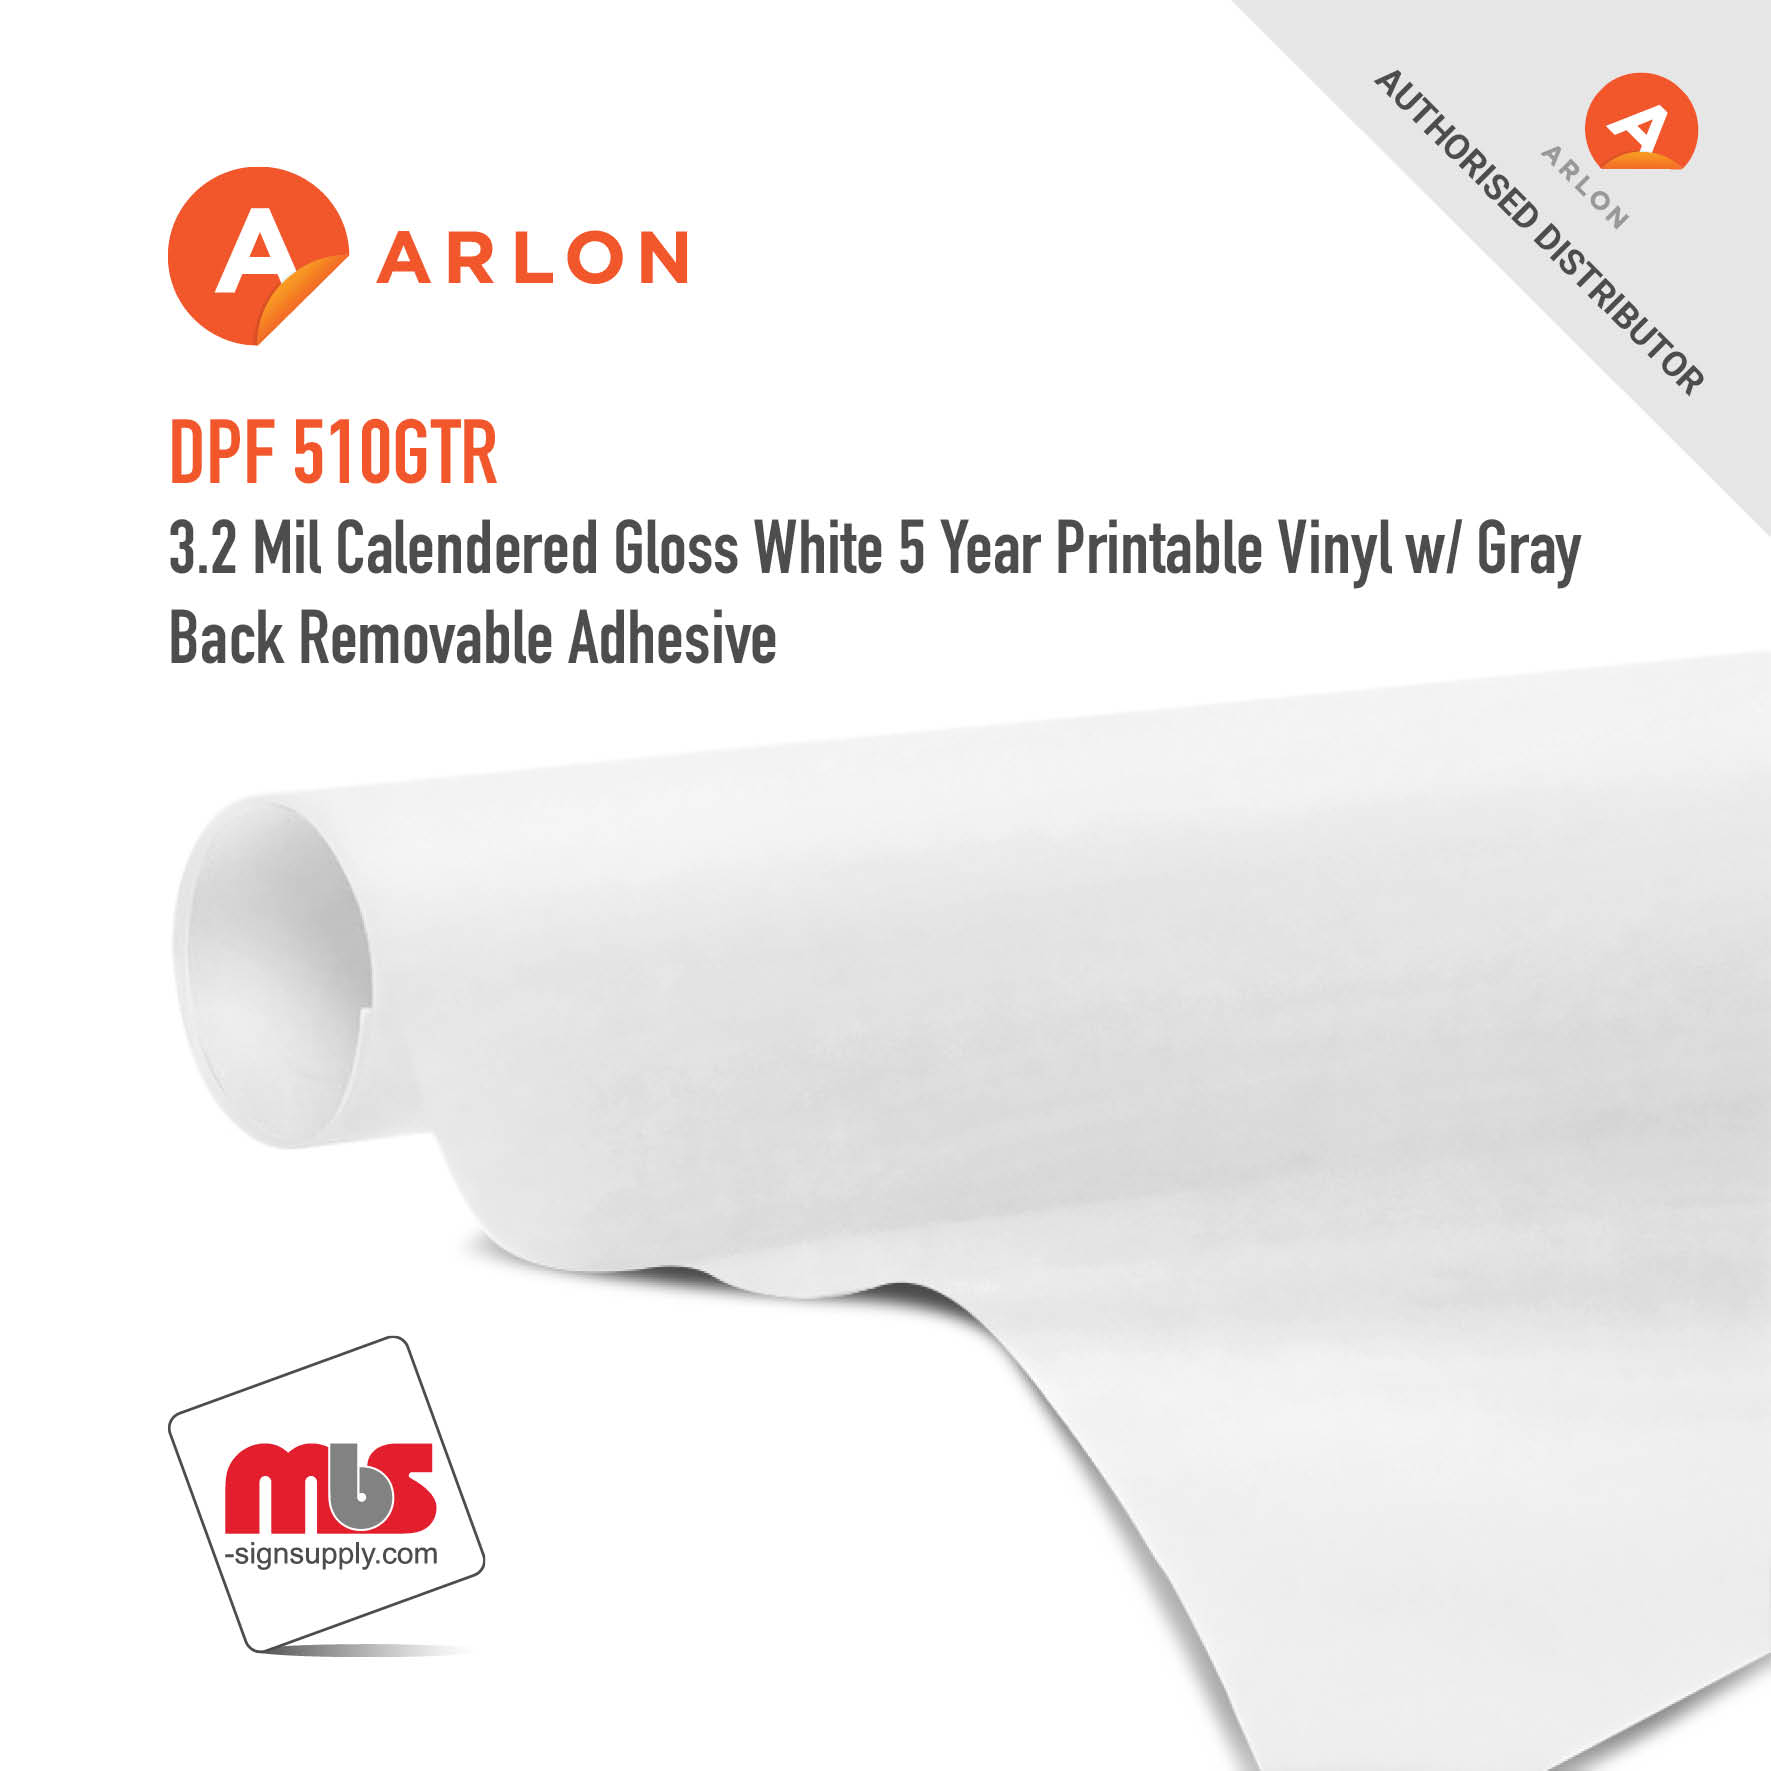 54'' x 50 Yard Roll - Arlon DPF 510GTR 3.2 Mil Calendered Gloss White 5 Year Printable Vinyl w/ Gray Back Removable Adhesive